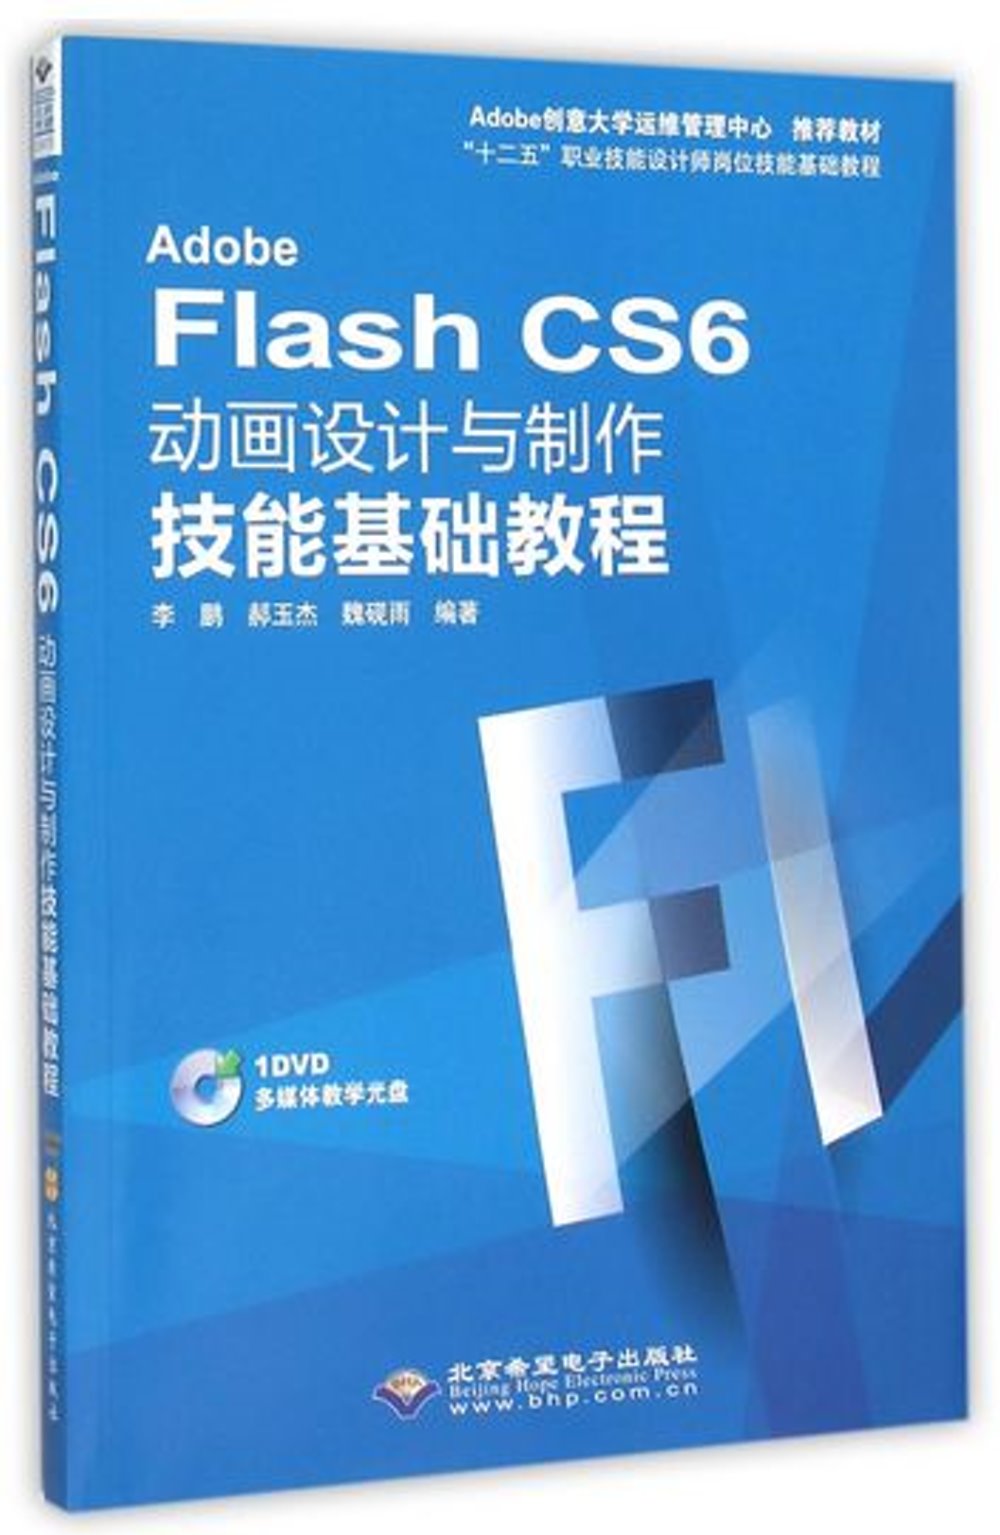 Adobe Flash CS6動畫設計與制作技能基礎教程